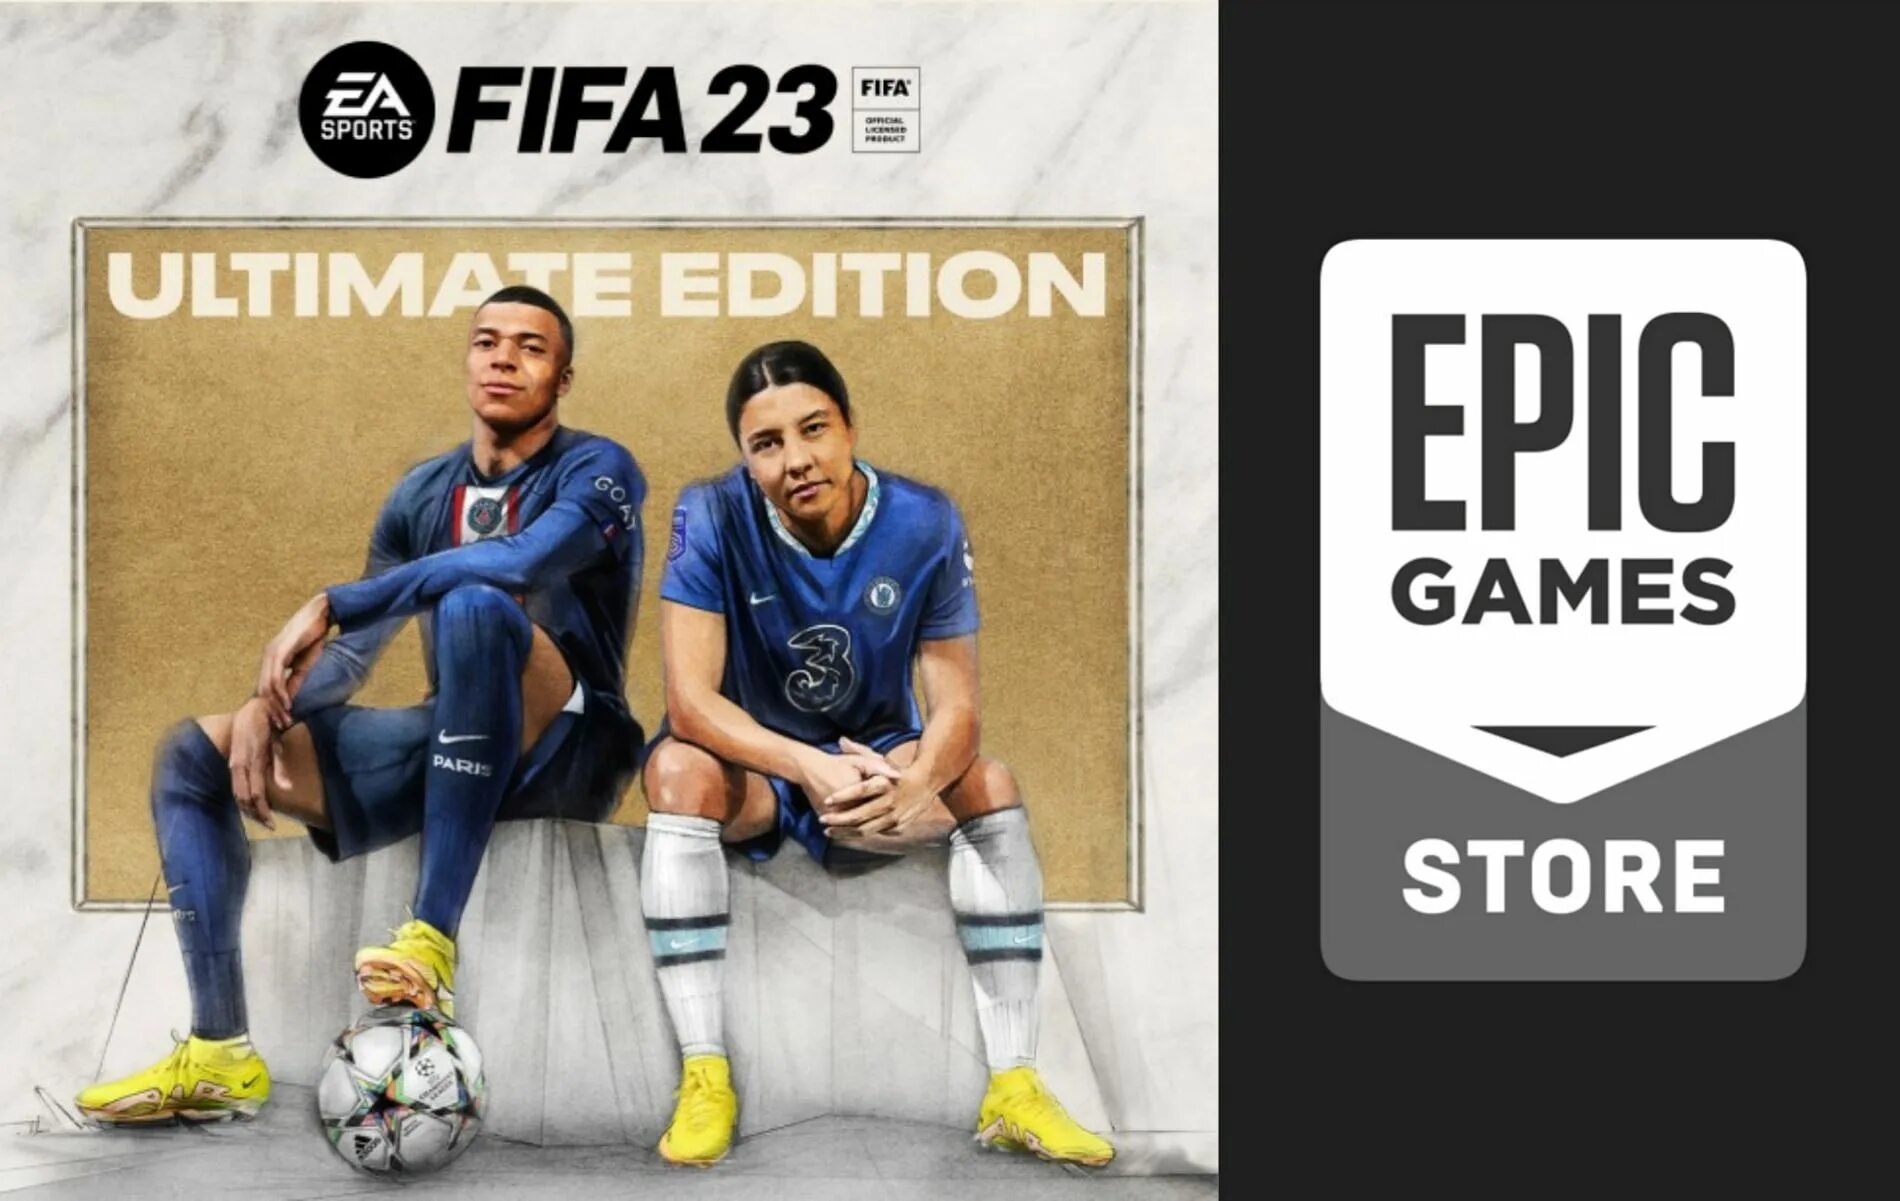 Fifa 23 epic. ФИФА 23 ультимейт. Игроки ФИФА 23. FIFA 23 Ultimate Edition. Игроки года в ФИФА 23.